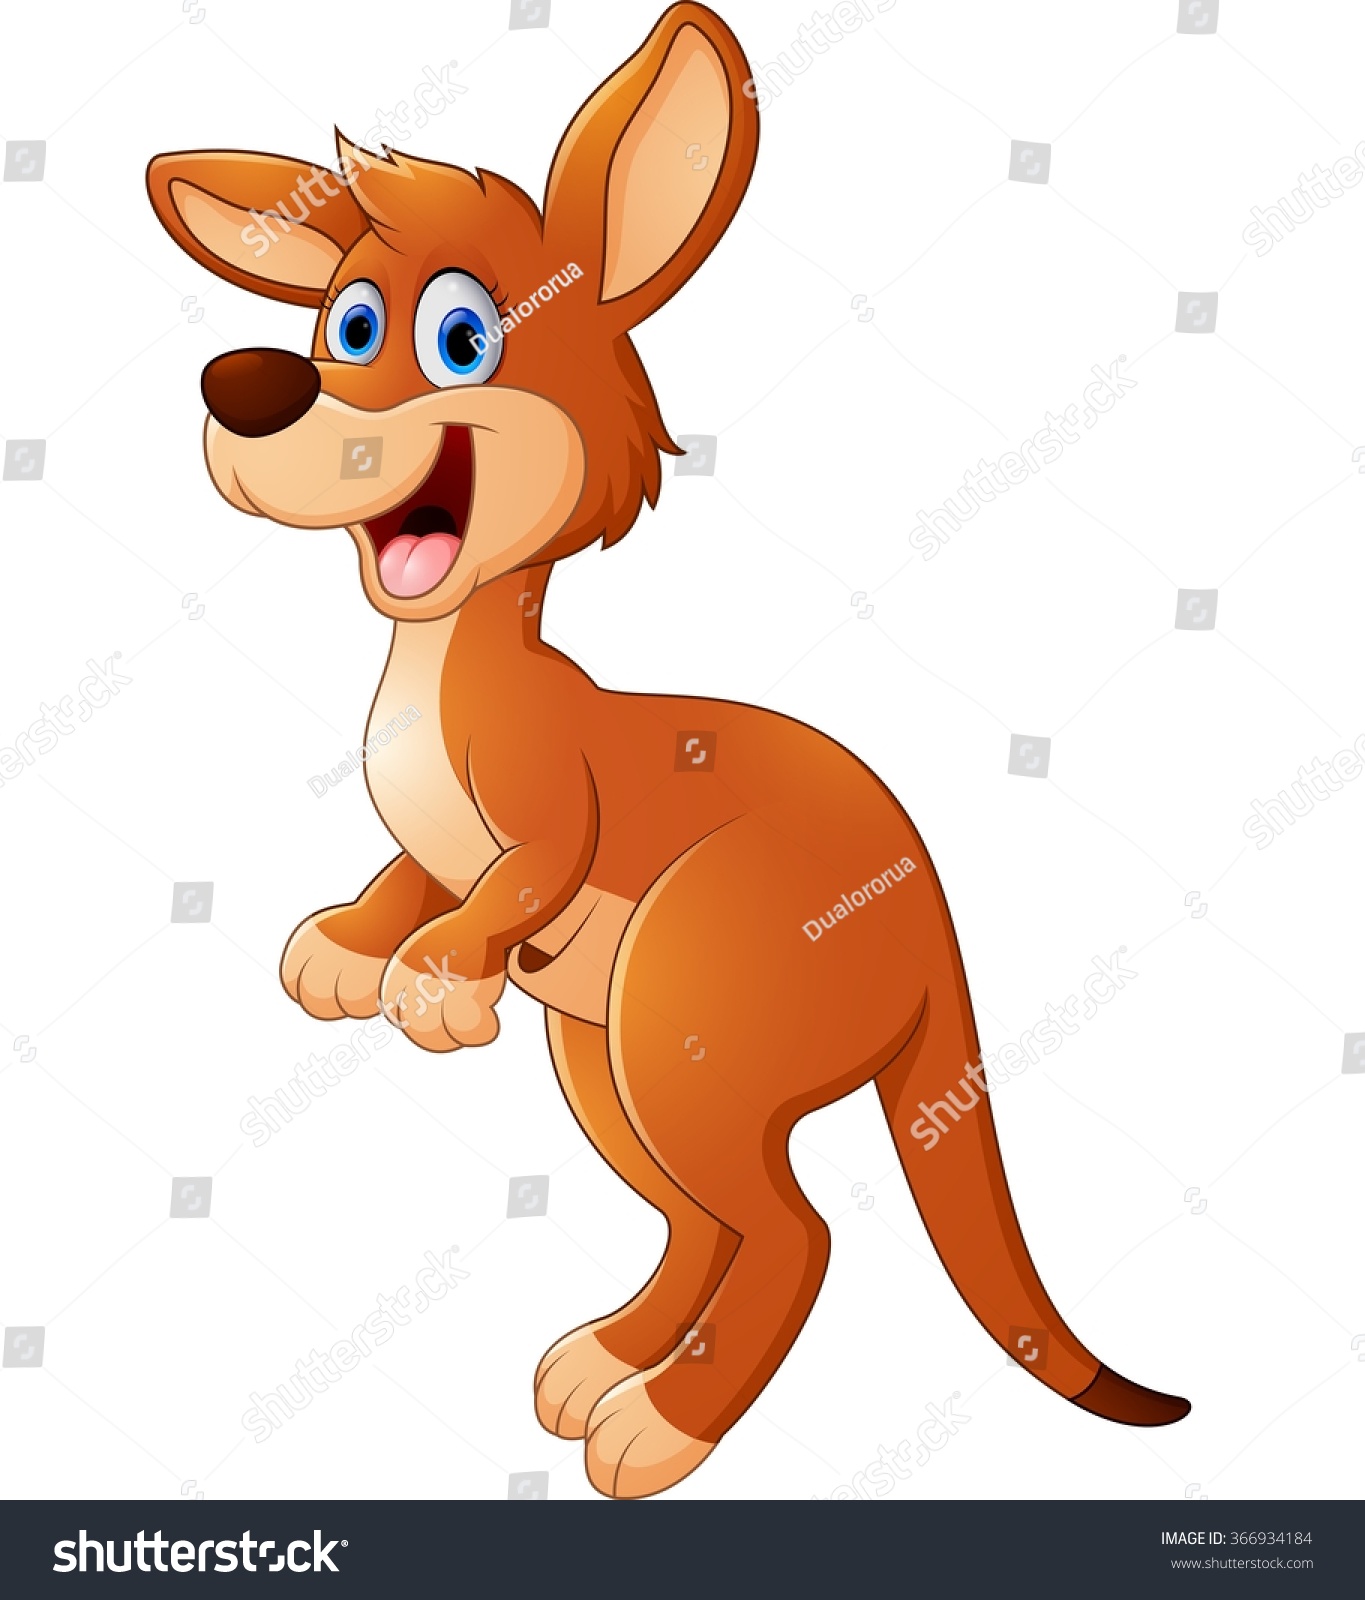 Jumping Kangaroo Cartoon Stock Photo 366934184 : Shutterstock